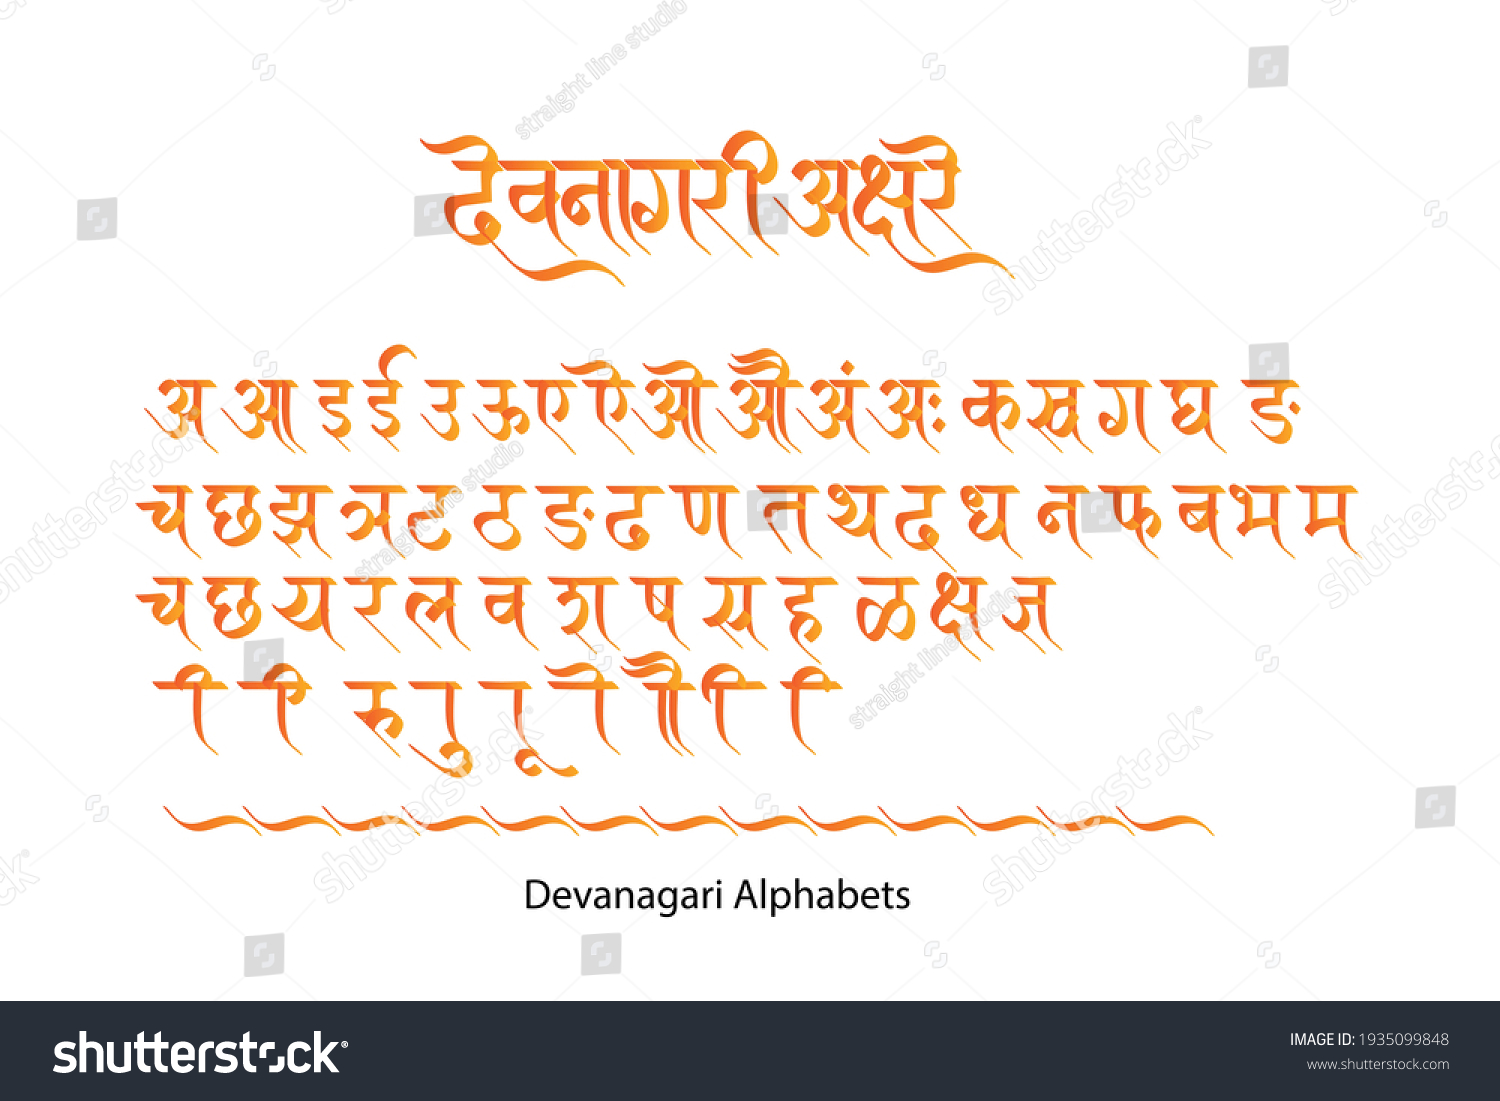 SVG of Handwritten Devanagari font for Indian languages Hindi, Sanskrit and Marathi Indian languages svg